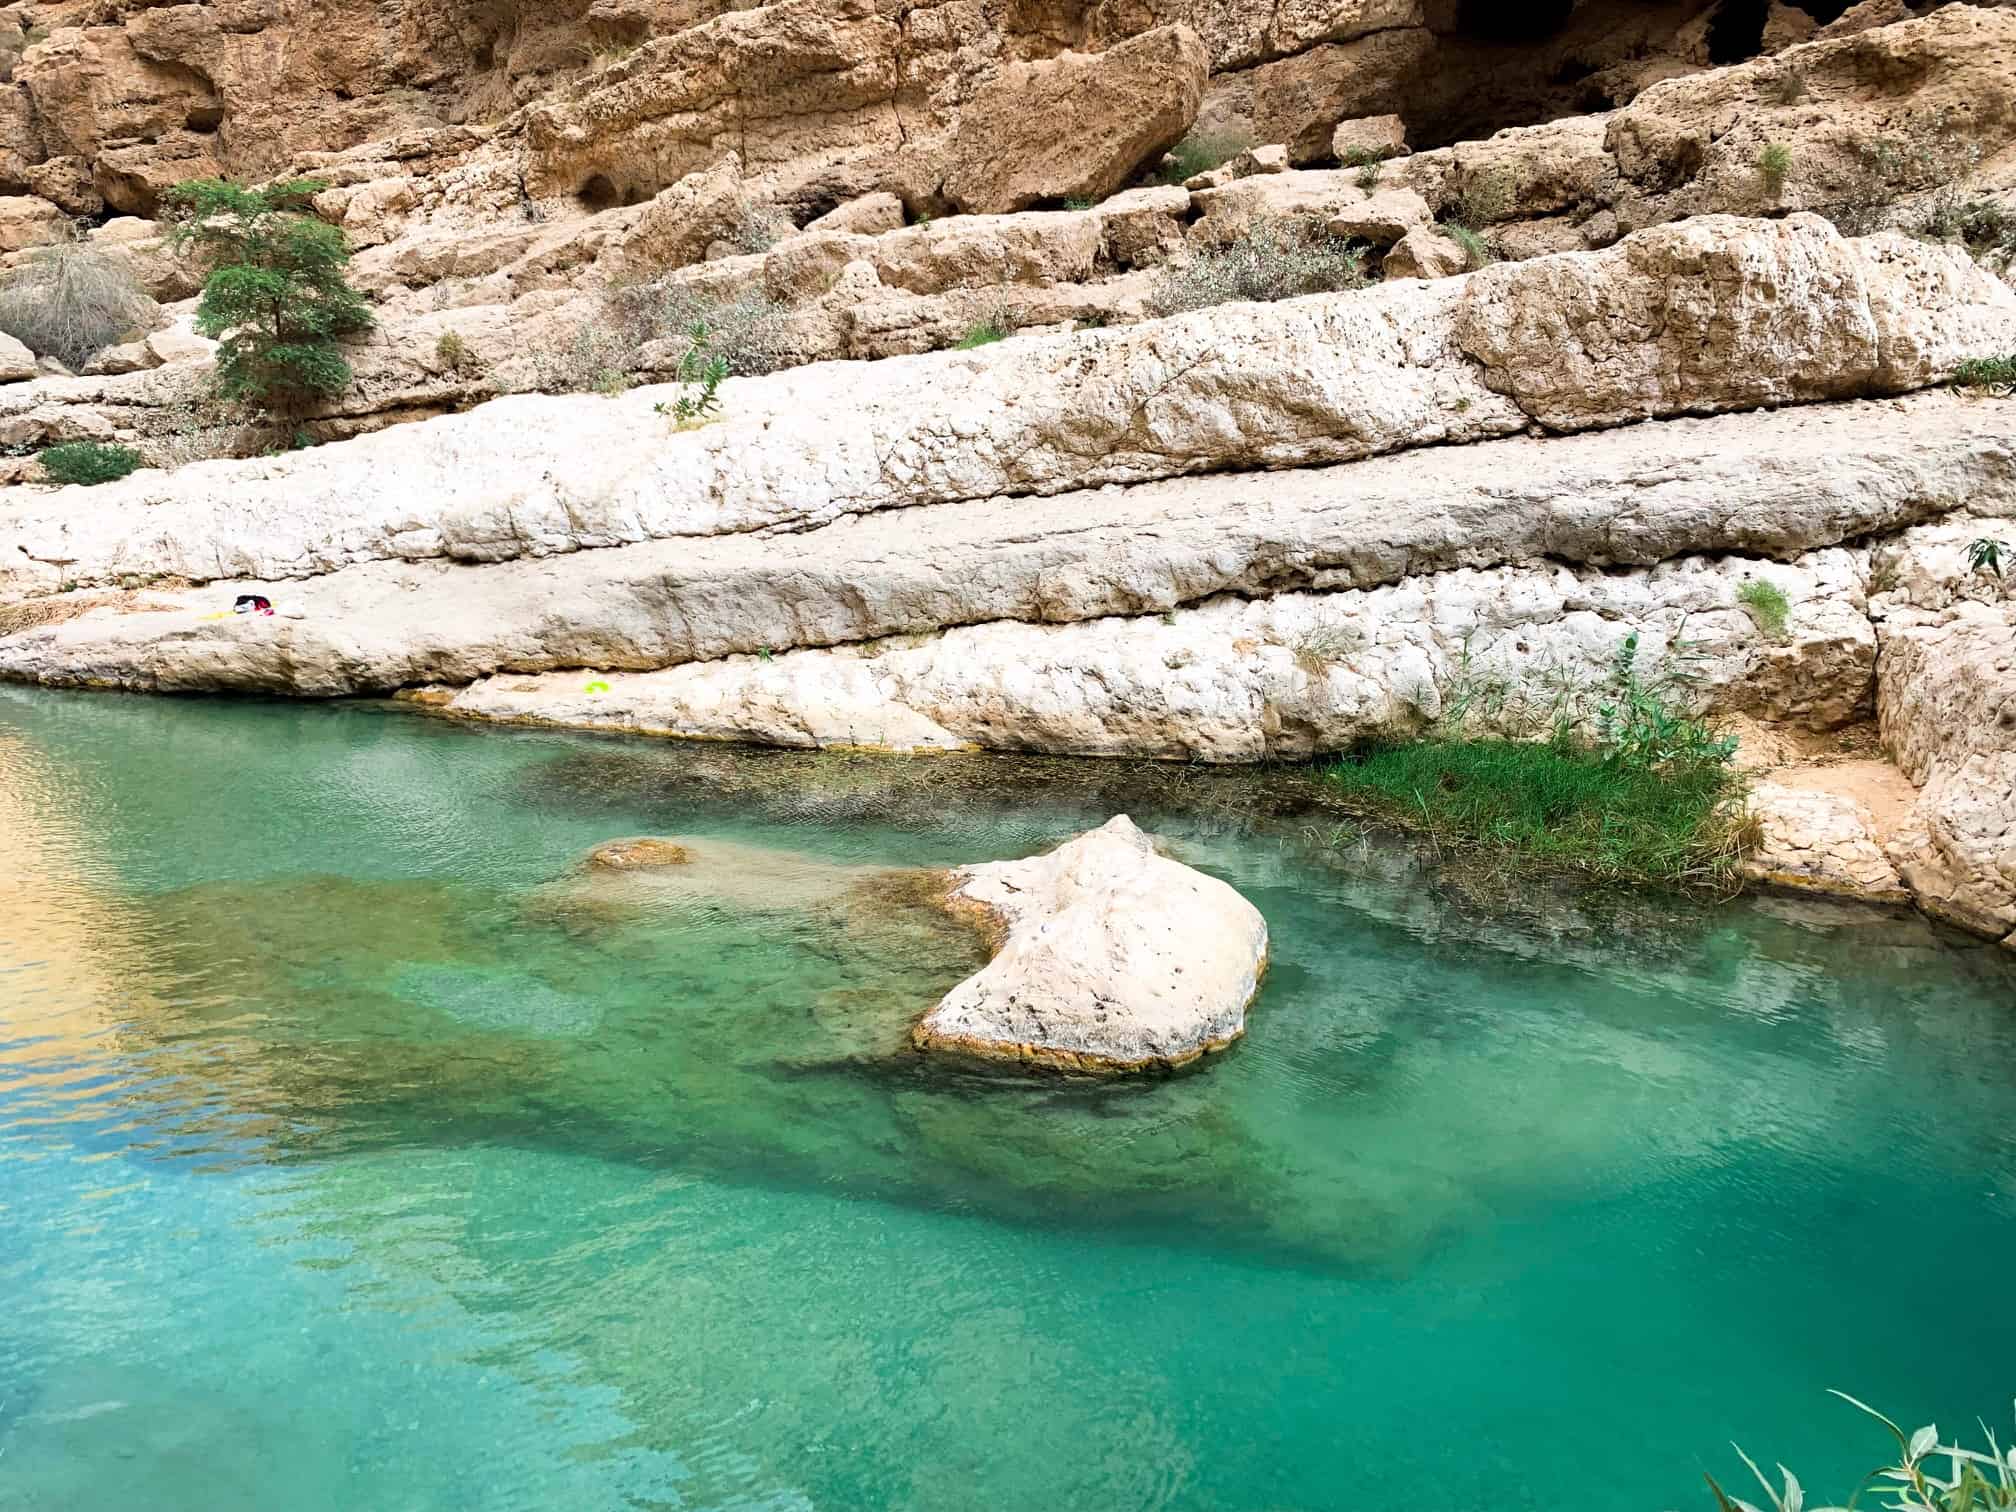 Stunning waters in Wadi Shab Oman